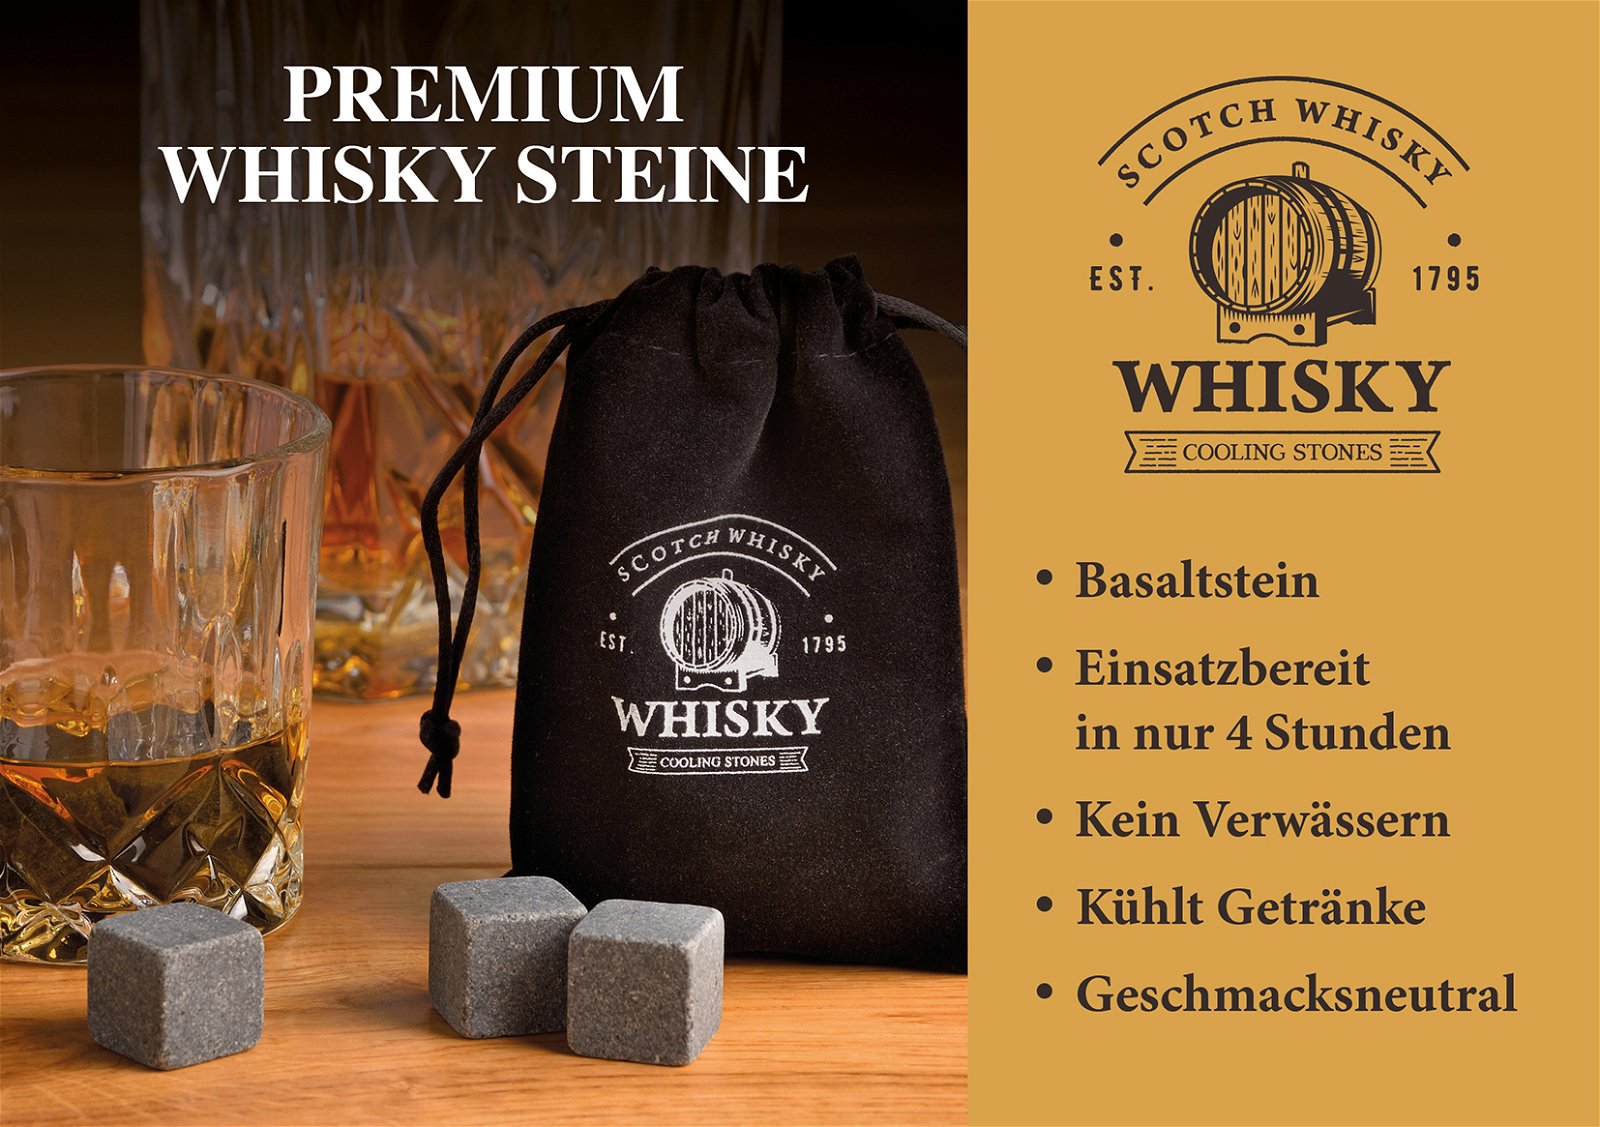 Juego de piedras de whisky, cubitos de hielo de piedra de basalto 2x2x2cm Juego de 6, en caja de madera (A/H/D) 10x6x3cm